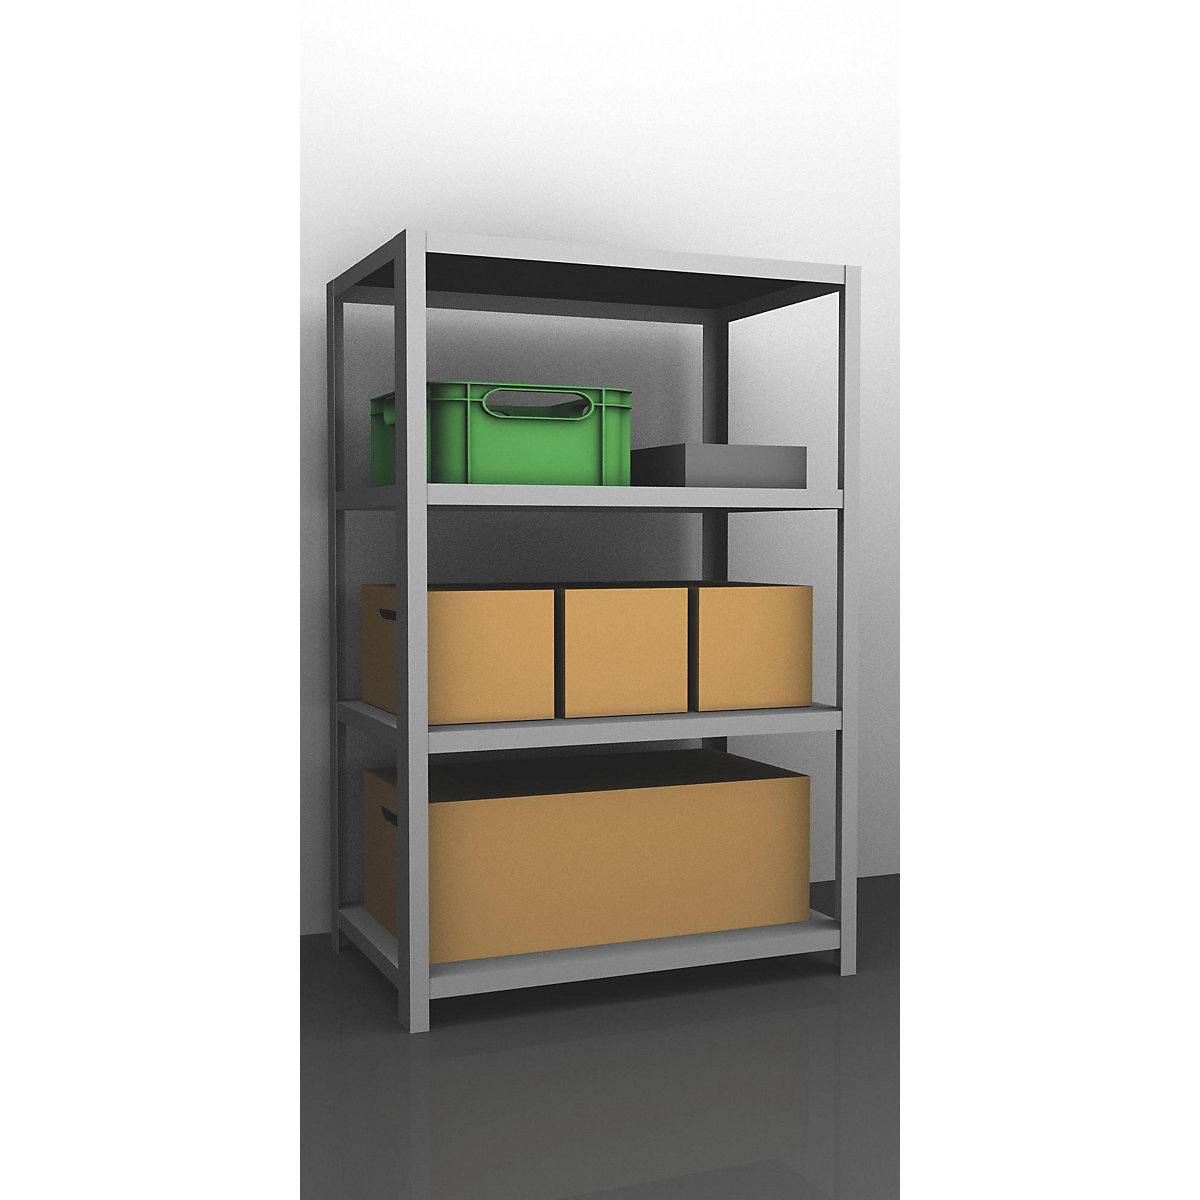 Bolt-together storage shelving, zinc plated, medium duty – eurokraft pro, shelf unit height 1500 mm, shelf width 1000 mm, depth 800 mm, standard shelf unit-4